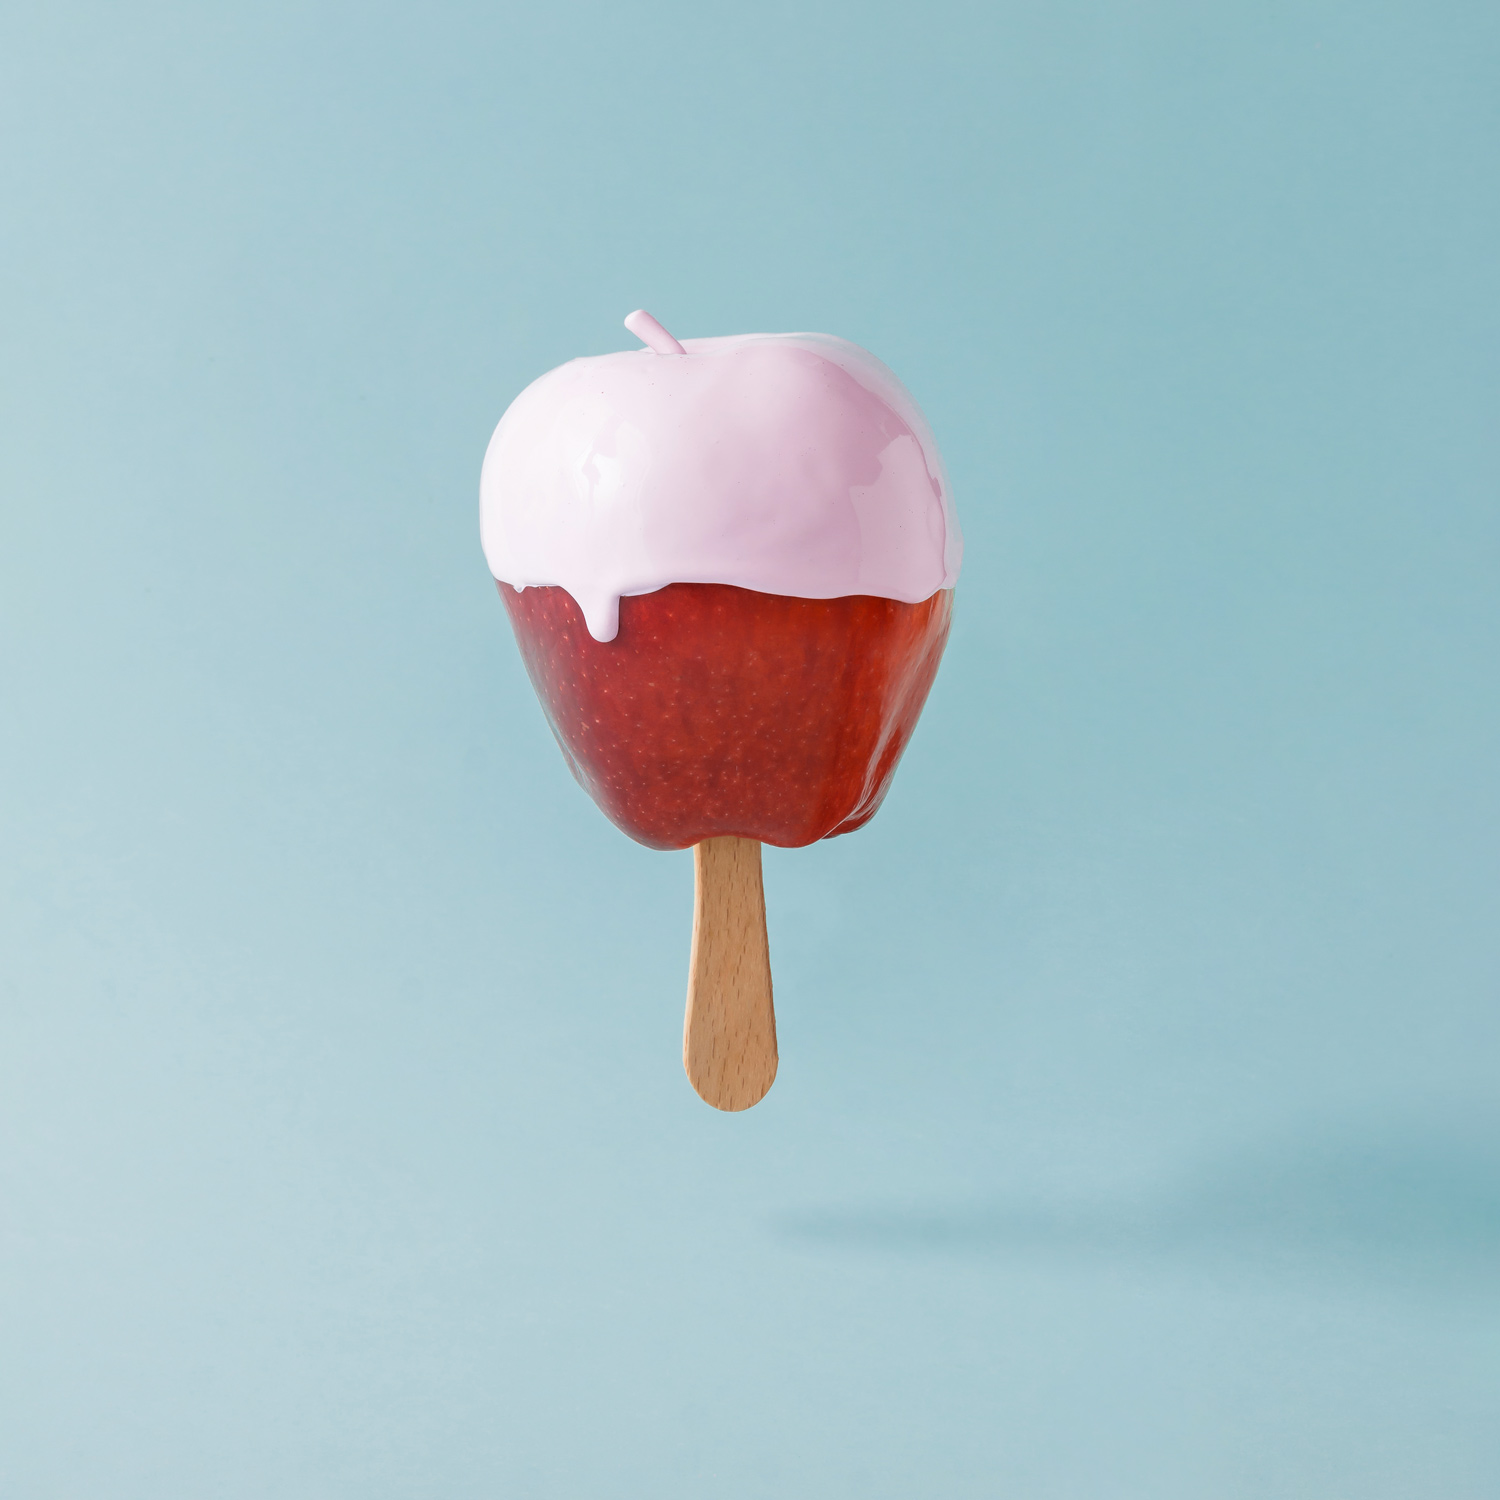 red-apple-with-ice-cream-stick-on-pastel-blue-back-2021-08-28-17-01-37-utc